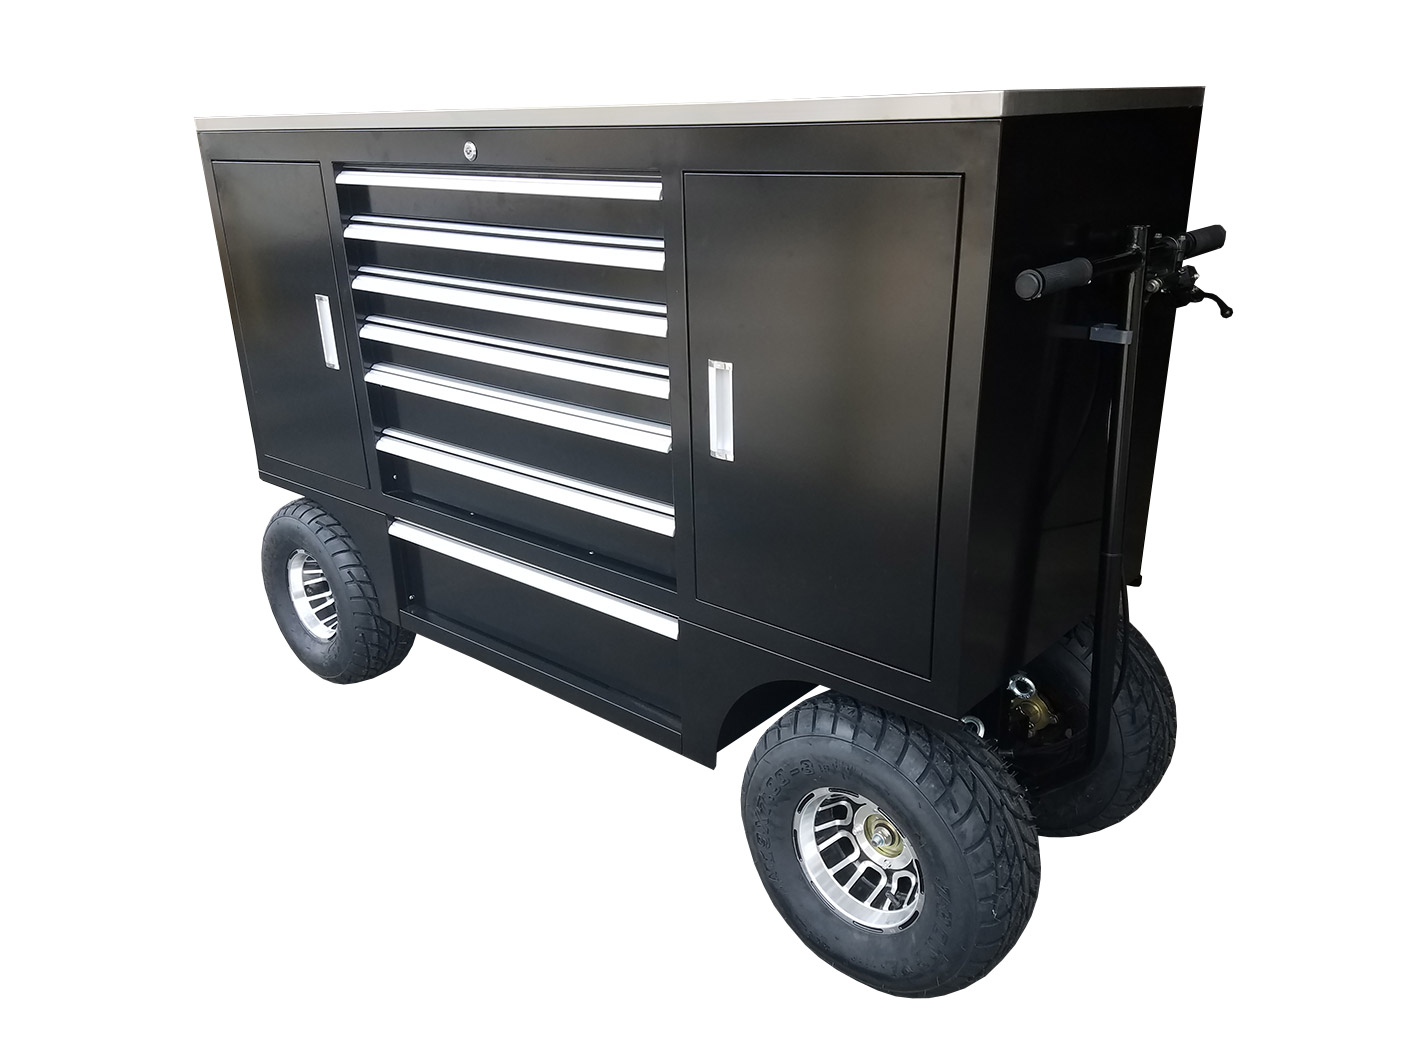 New Extreme Pit Box Pitbox Rolling Portable Racing Toolbox Cart Kart Tool Box